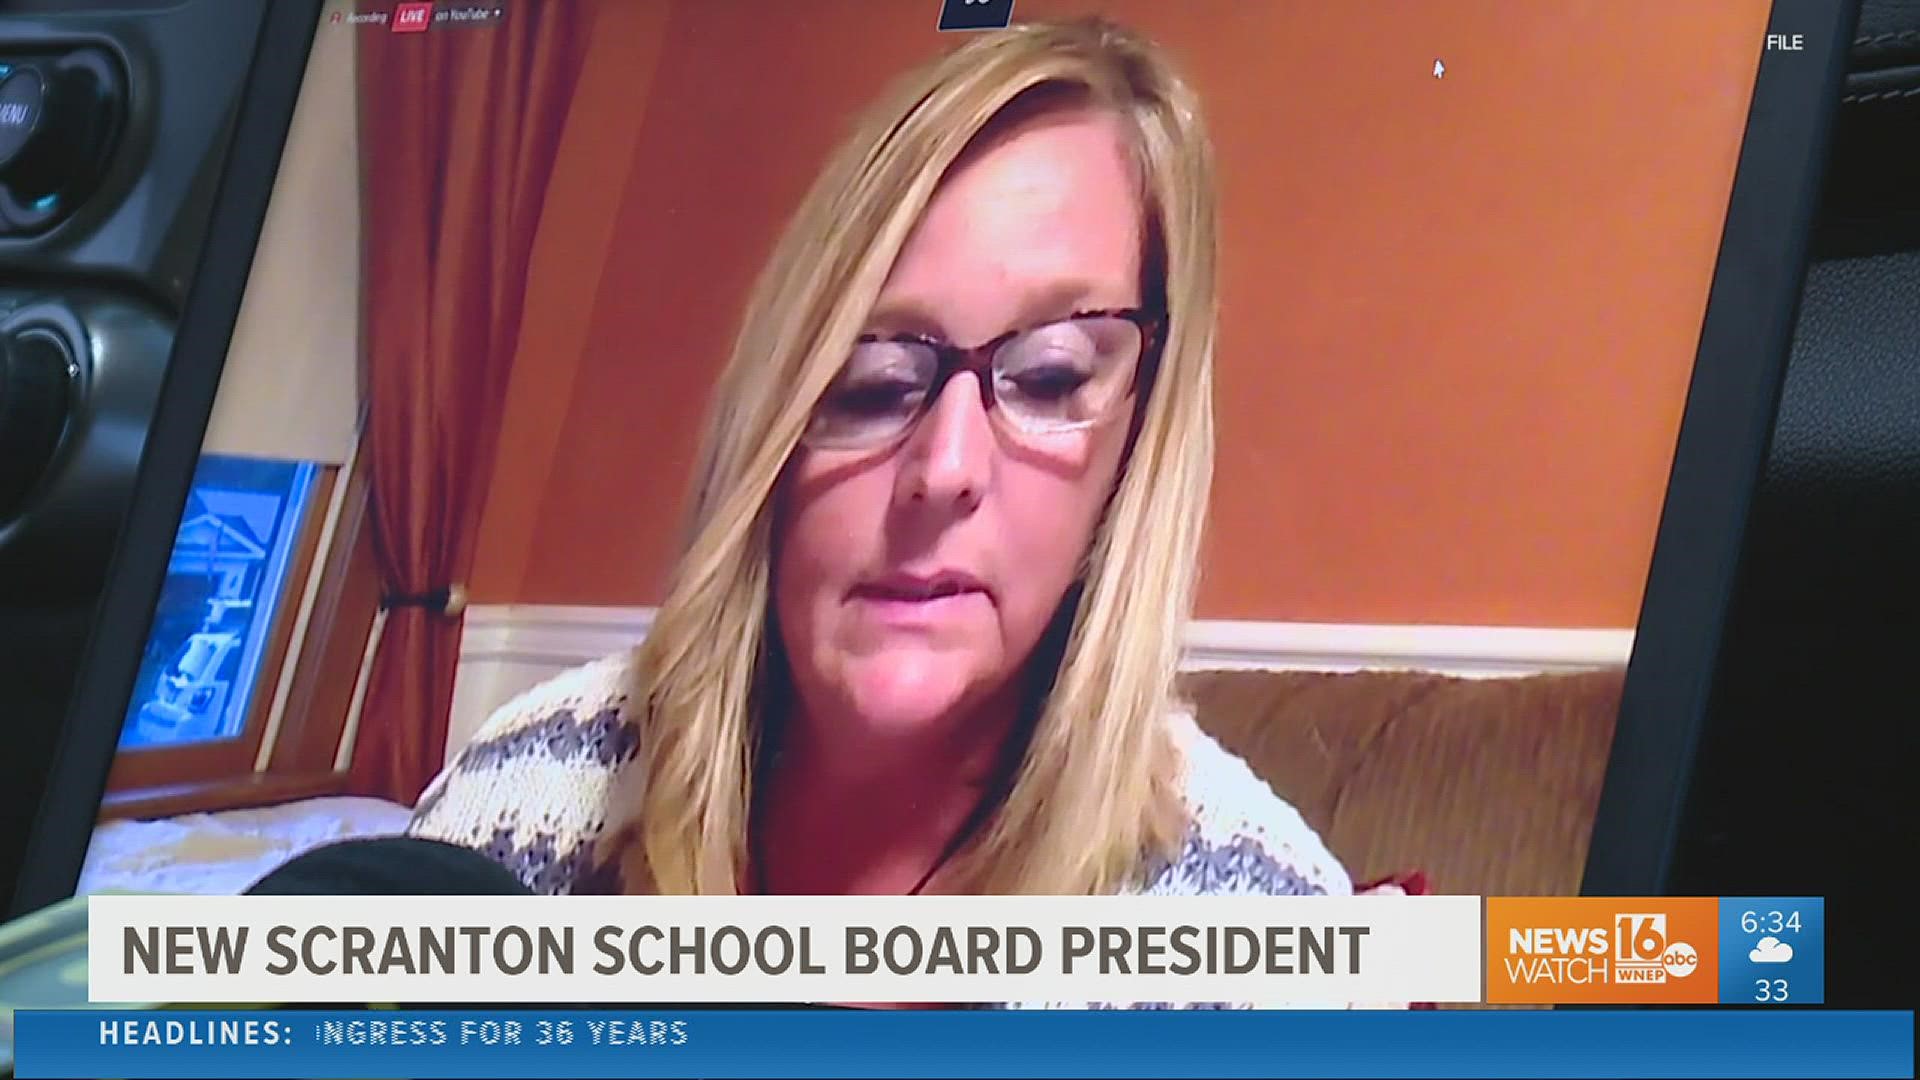 Tara Yanni was elected the new Scranton School Board President in a meeting on Monday night.